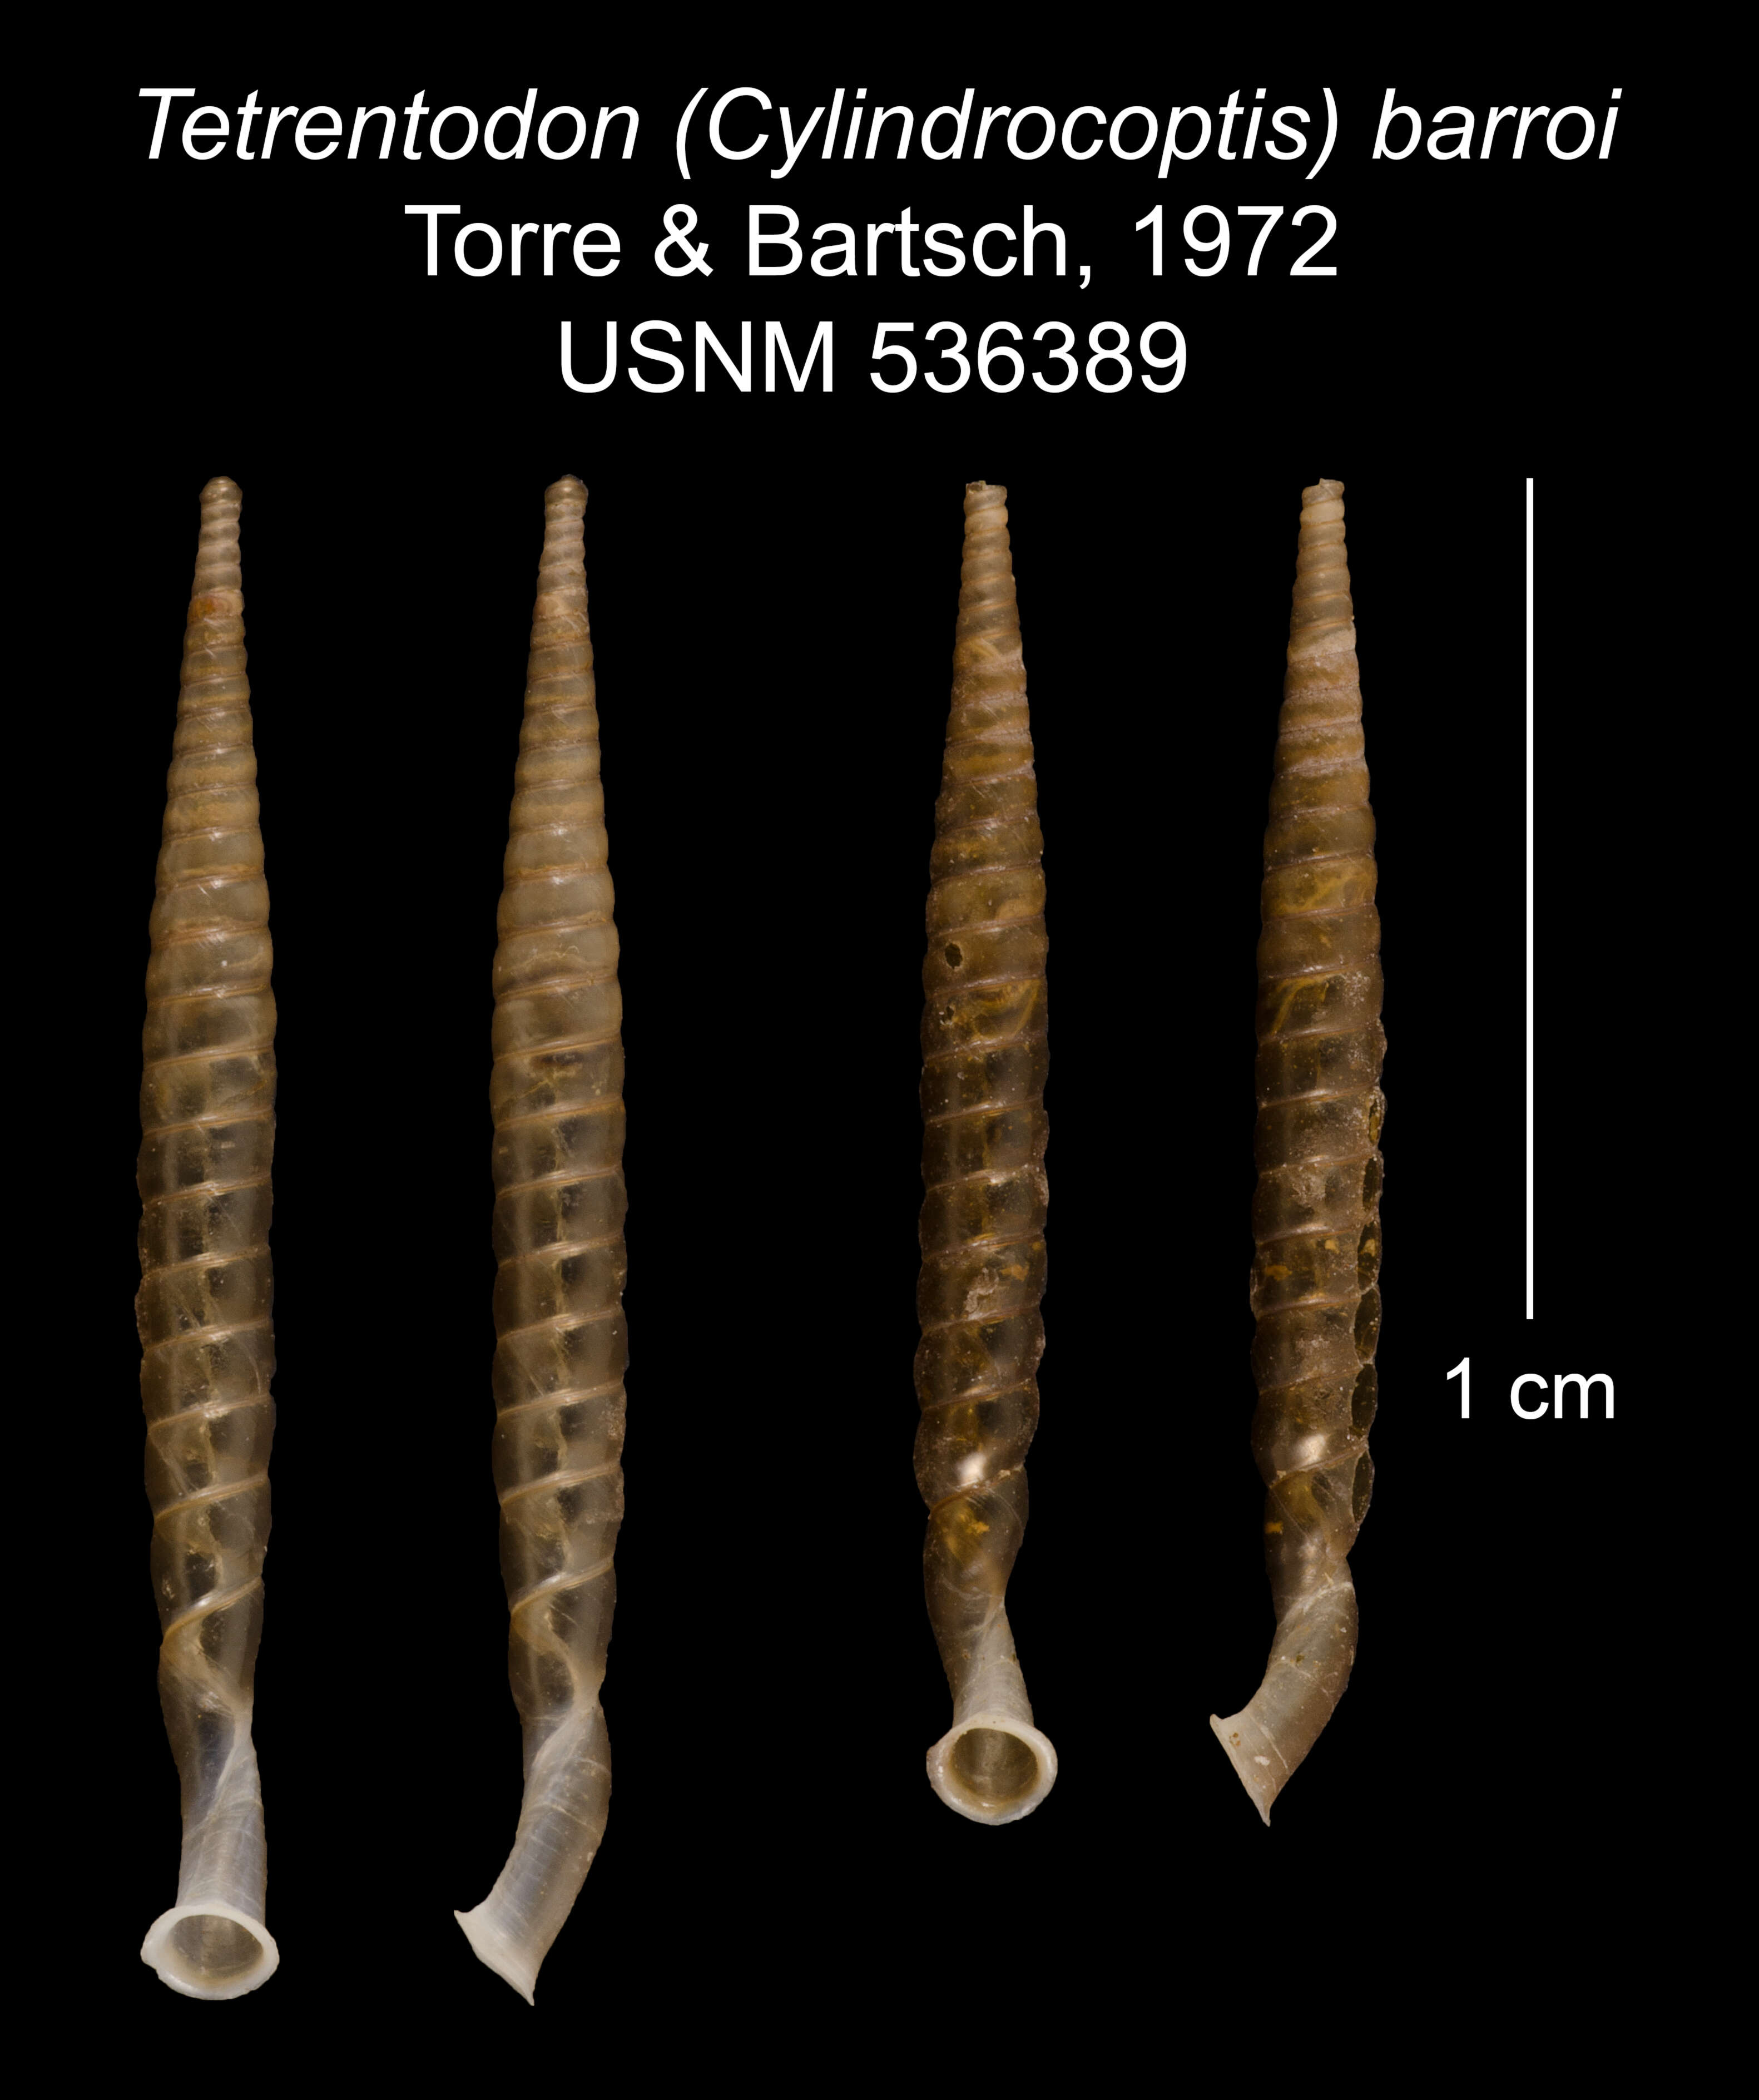 Image of Tetrentodon barroi C. de la Torre & Bartsch 1972